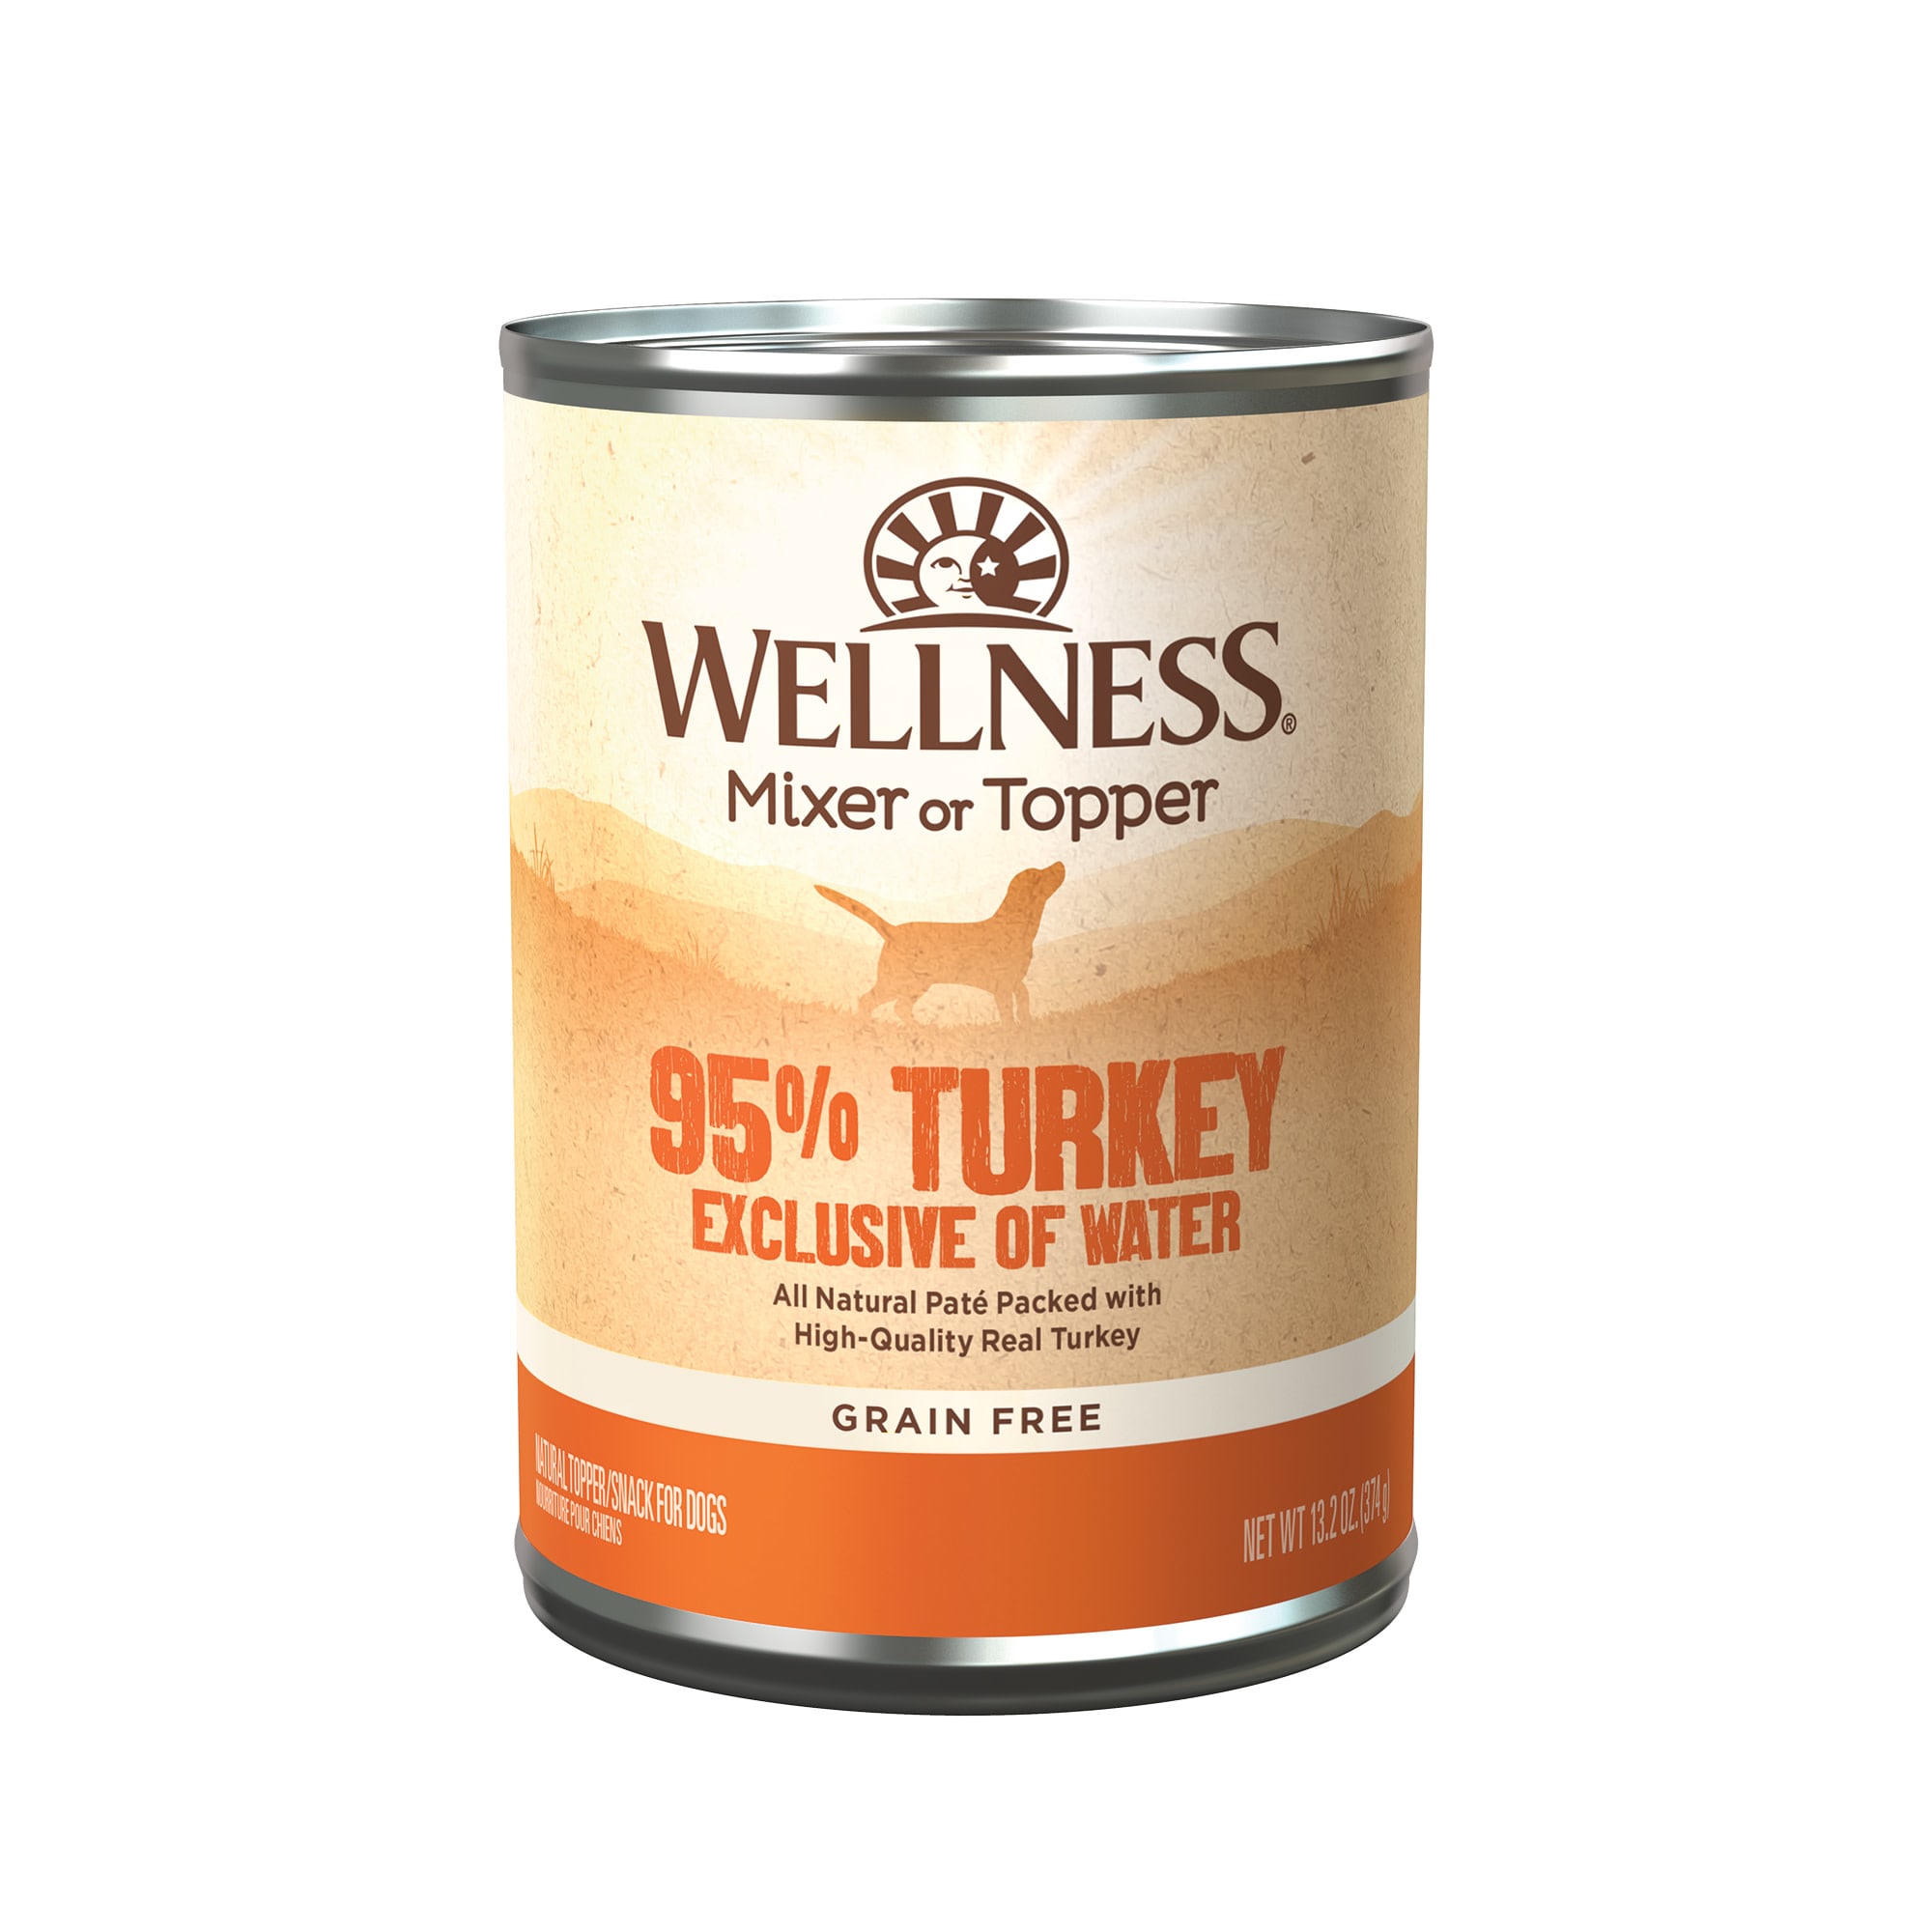 Simply Nourish Limited Ingredient Diet Adult Wet Dog Food - 13 oz, Flavor: Turkey | PetSmart